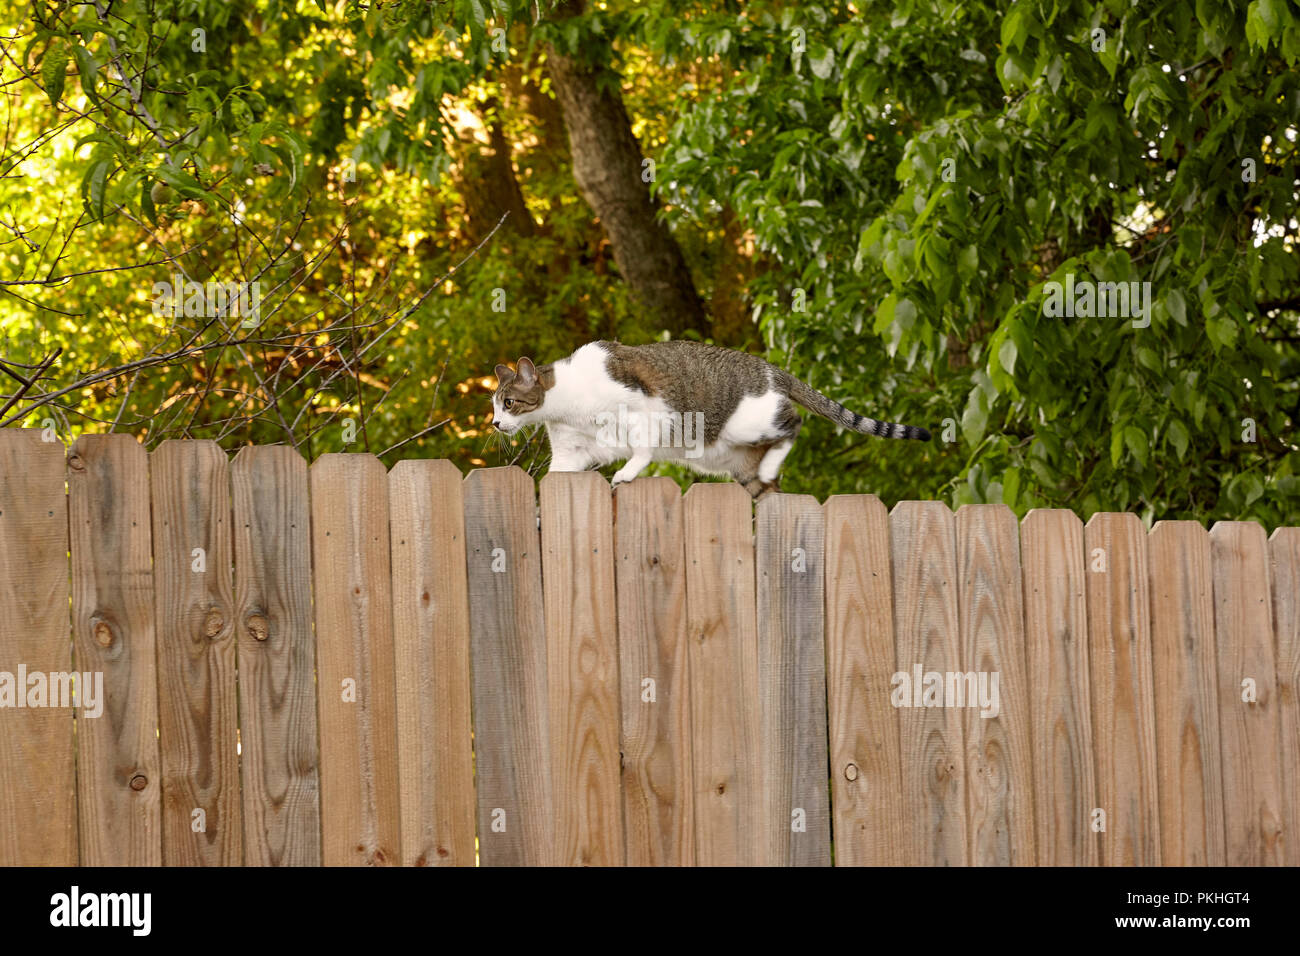 Cat on wood fence Stock Photo